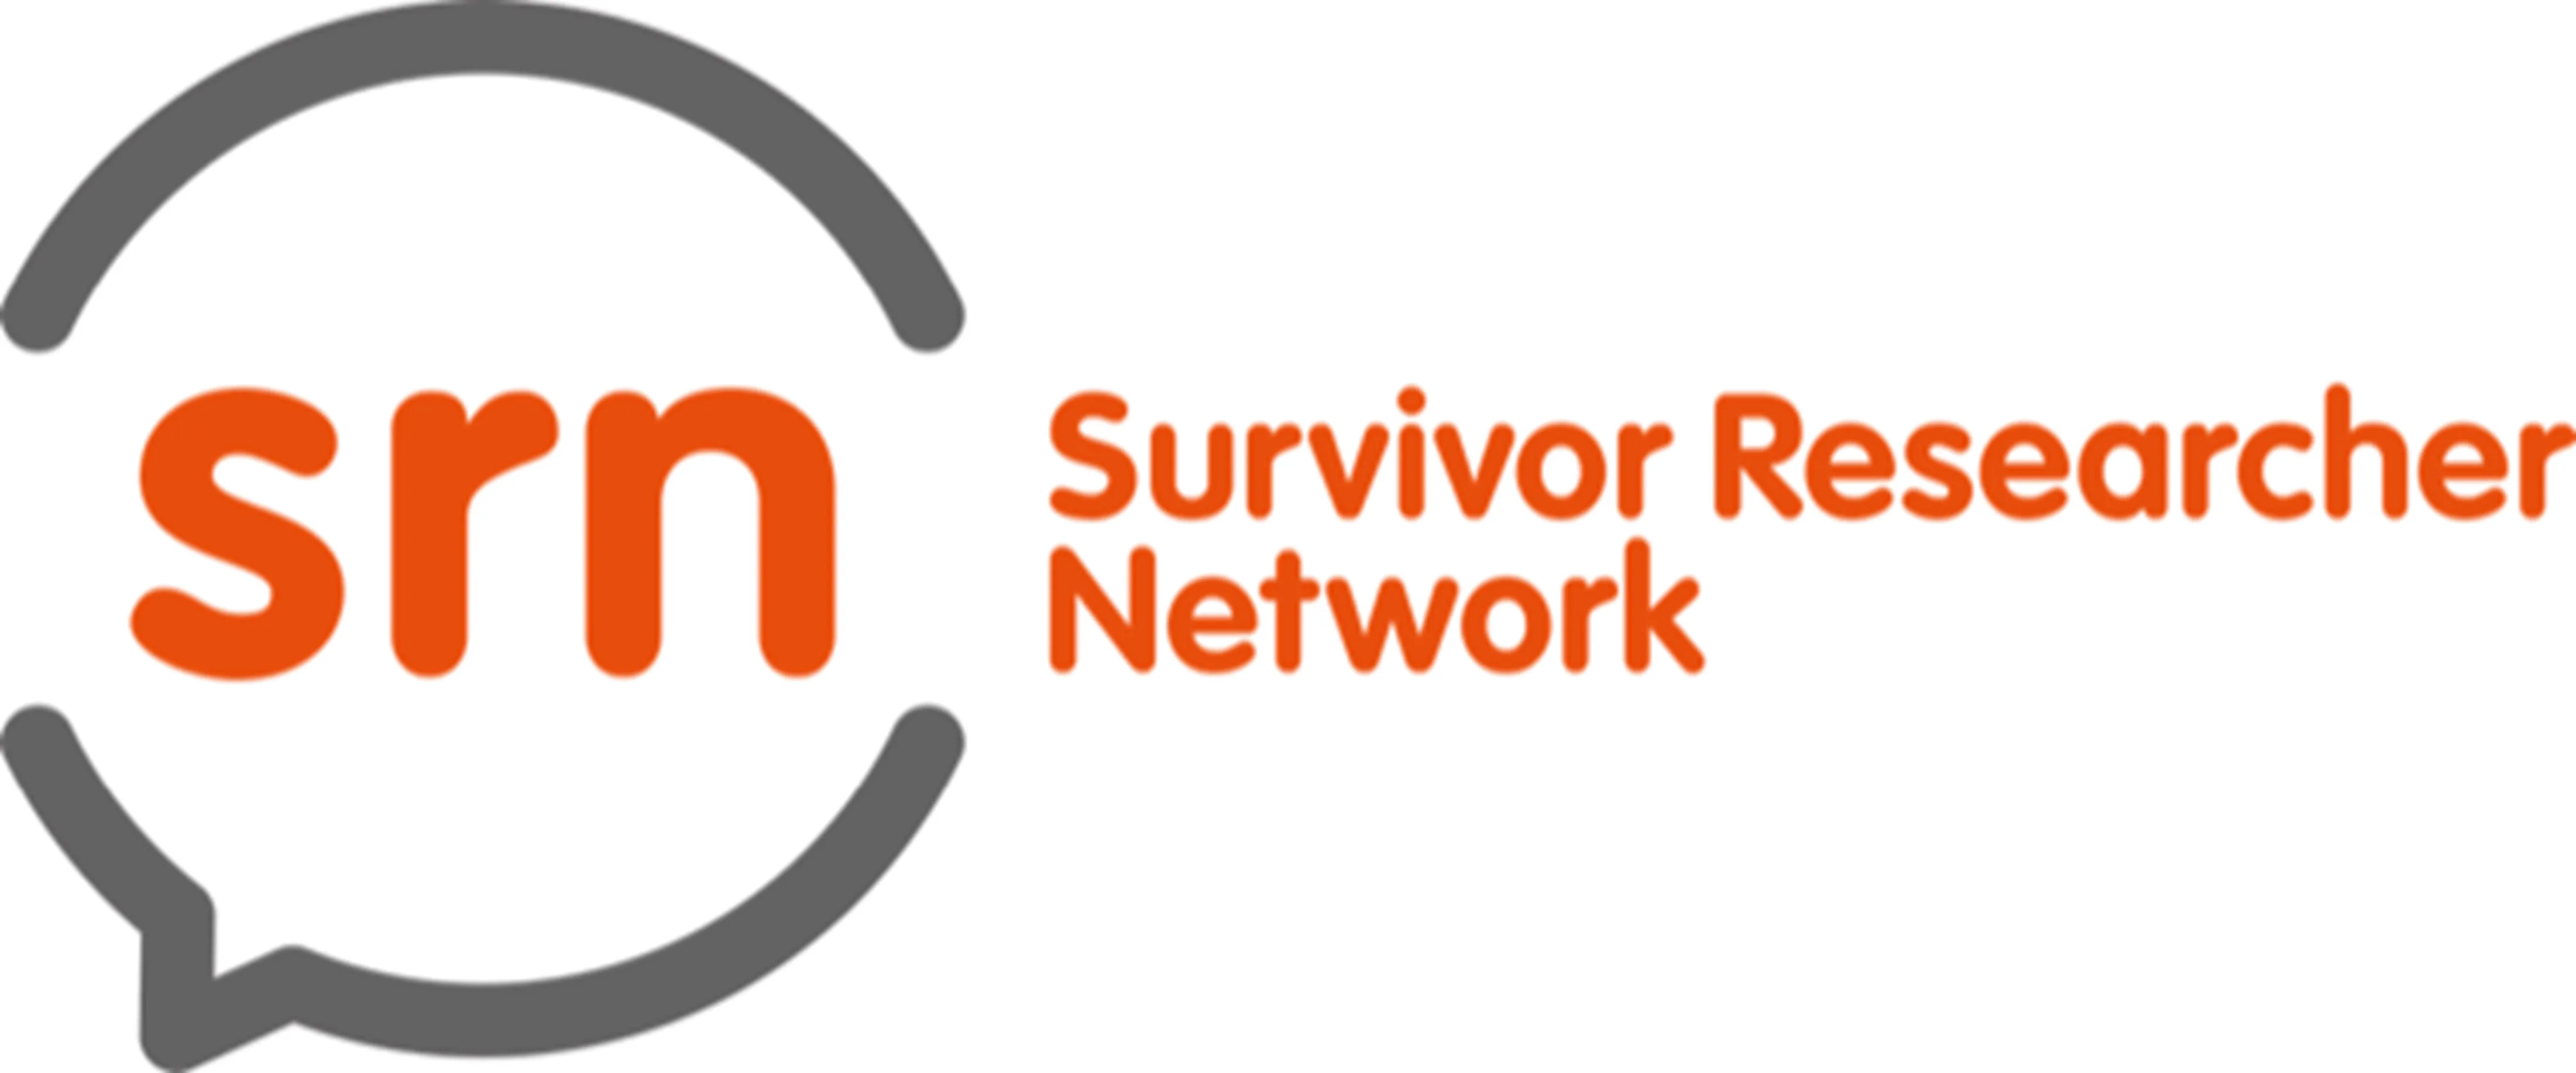 The Survivor Researcher Network logo